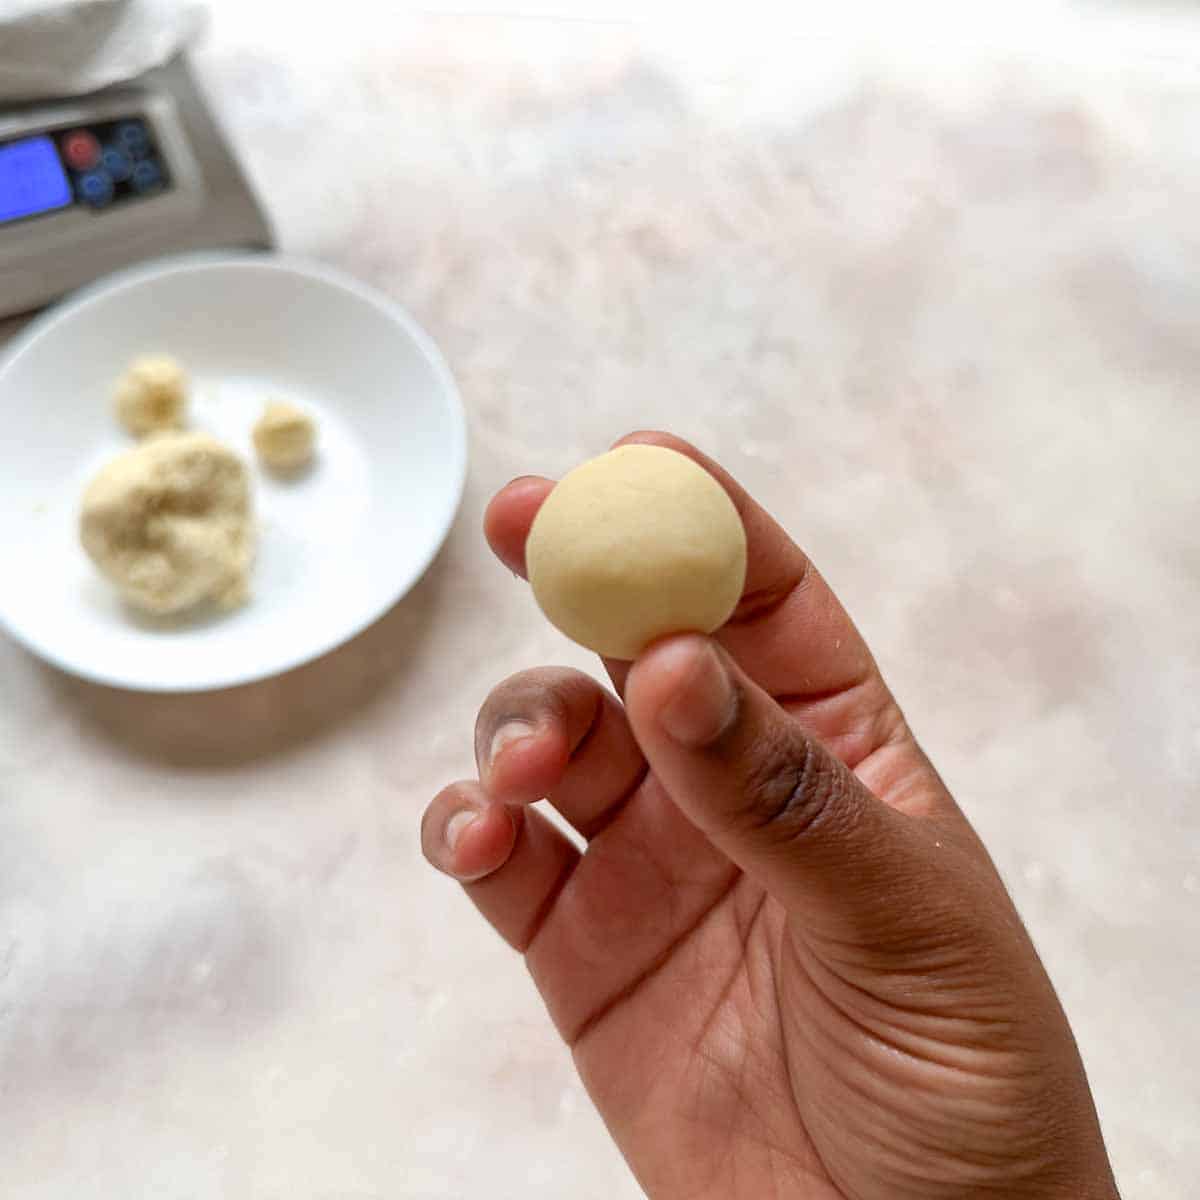 A hand holding a rolled gulab jamun dough